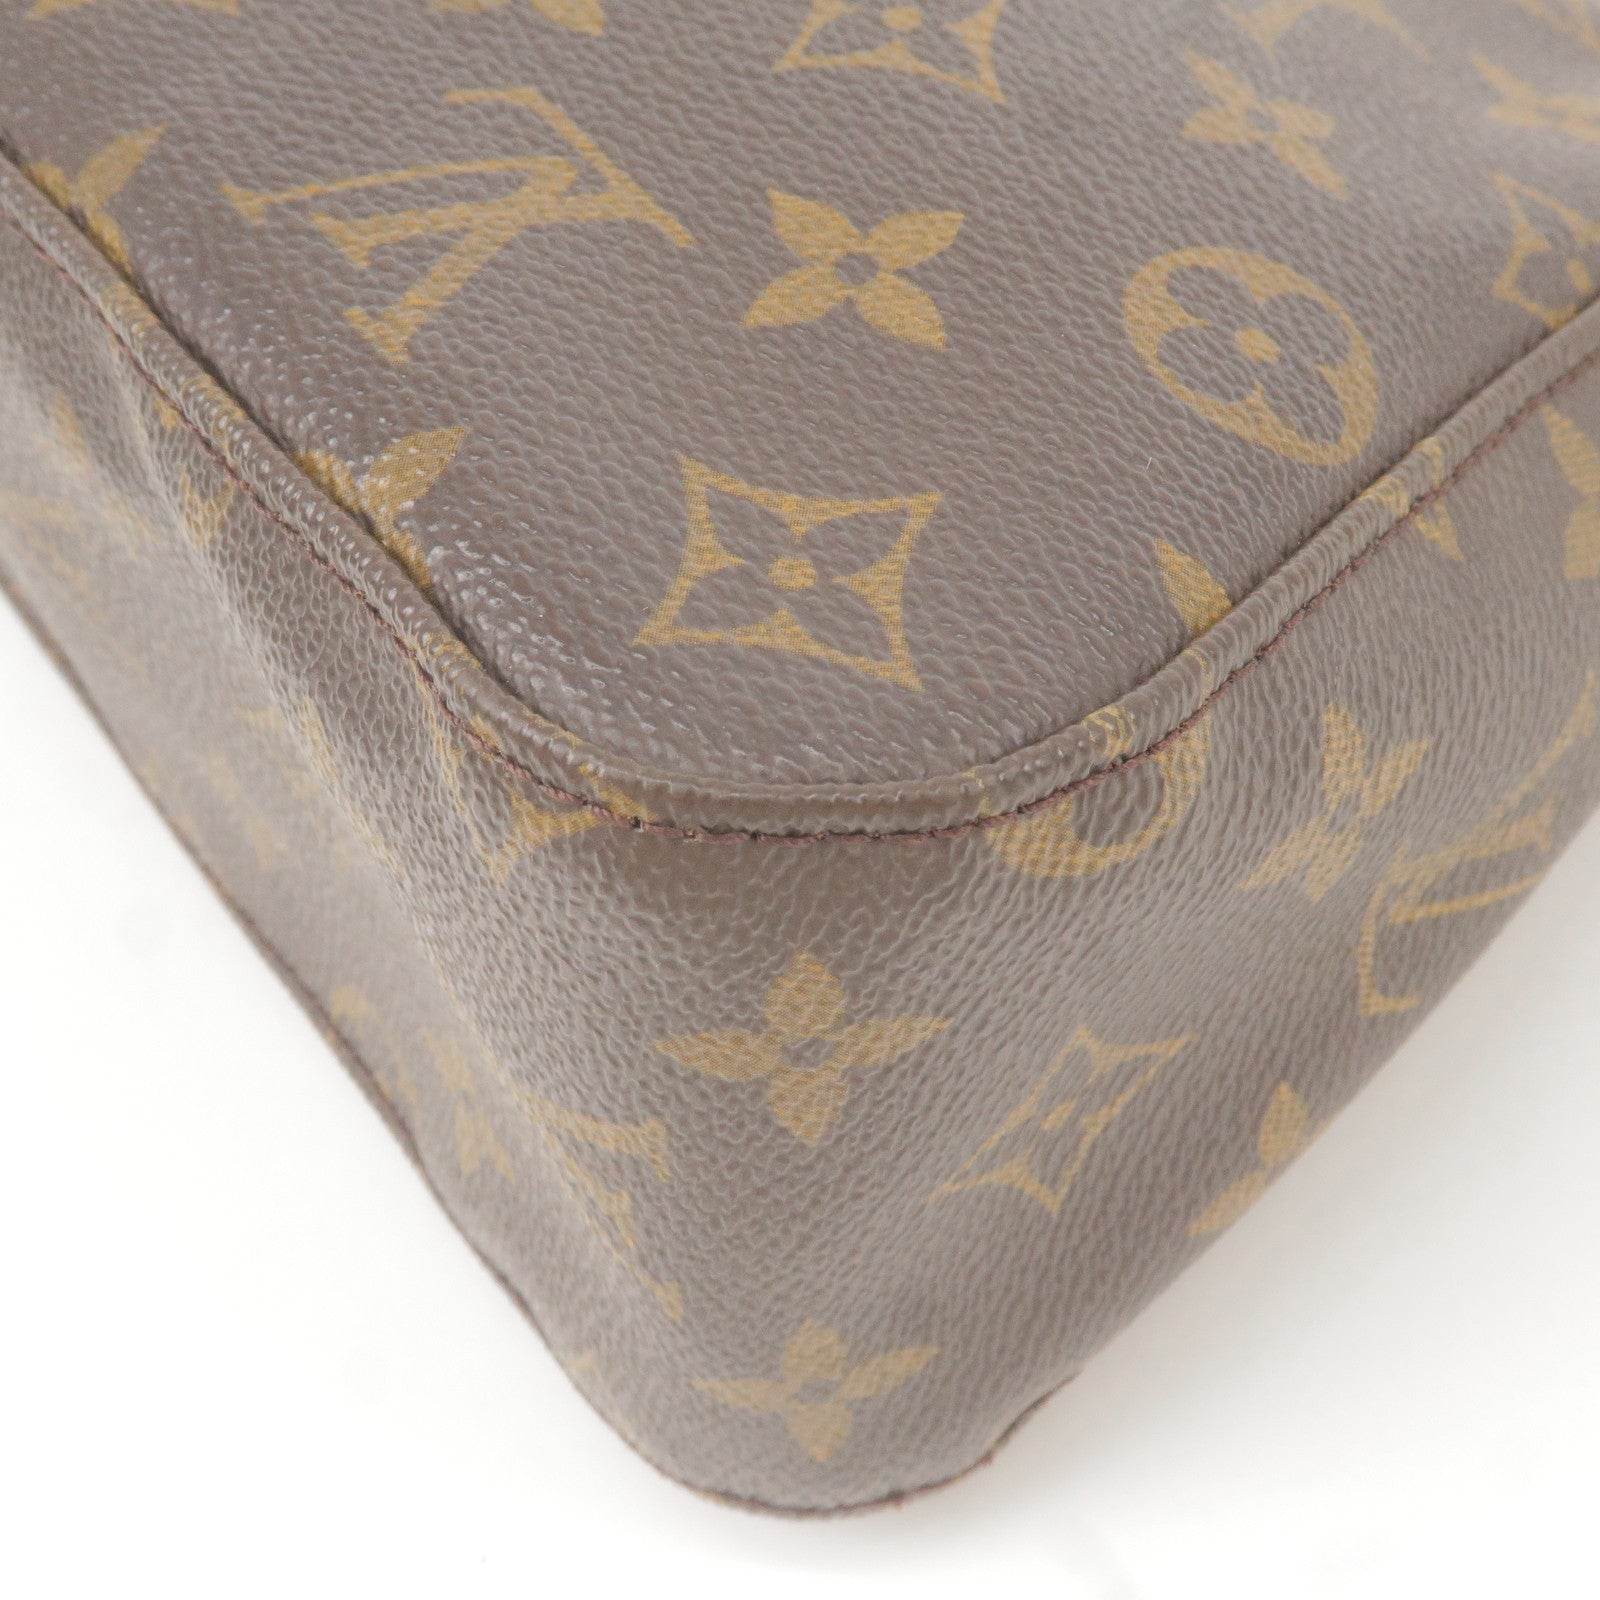 Louis Vuitton Mini LOOPING handbag Brown, Monogram M51147 for Sale